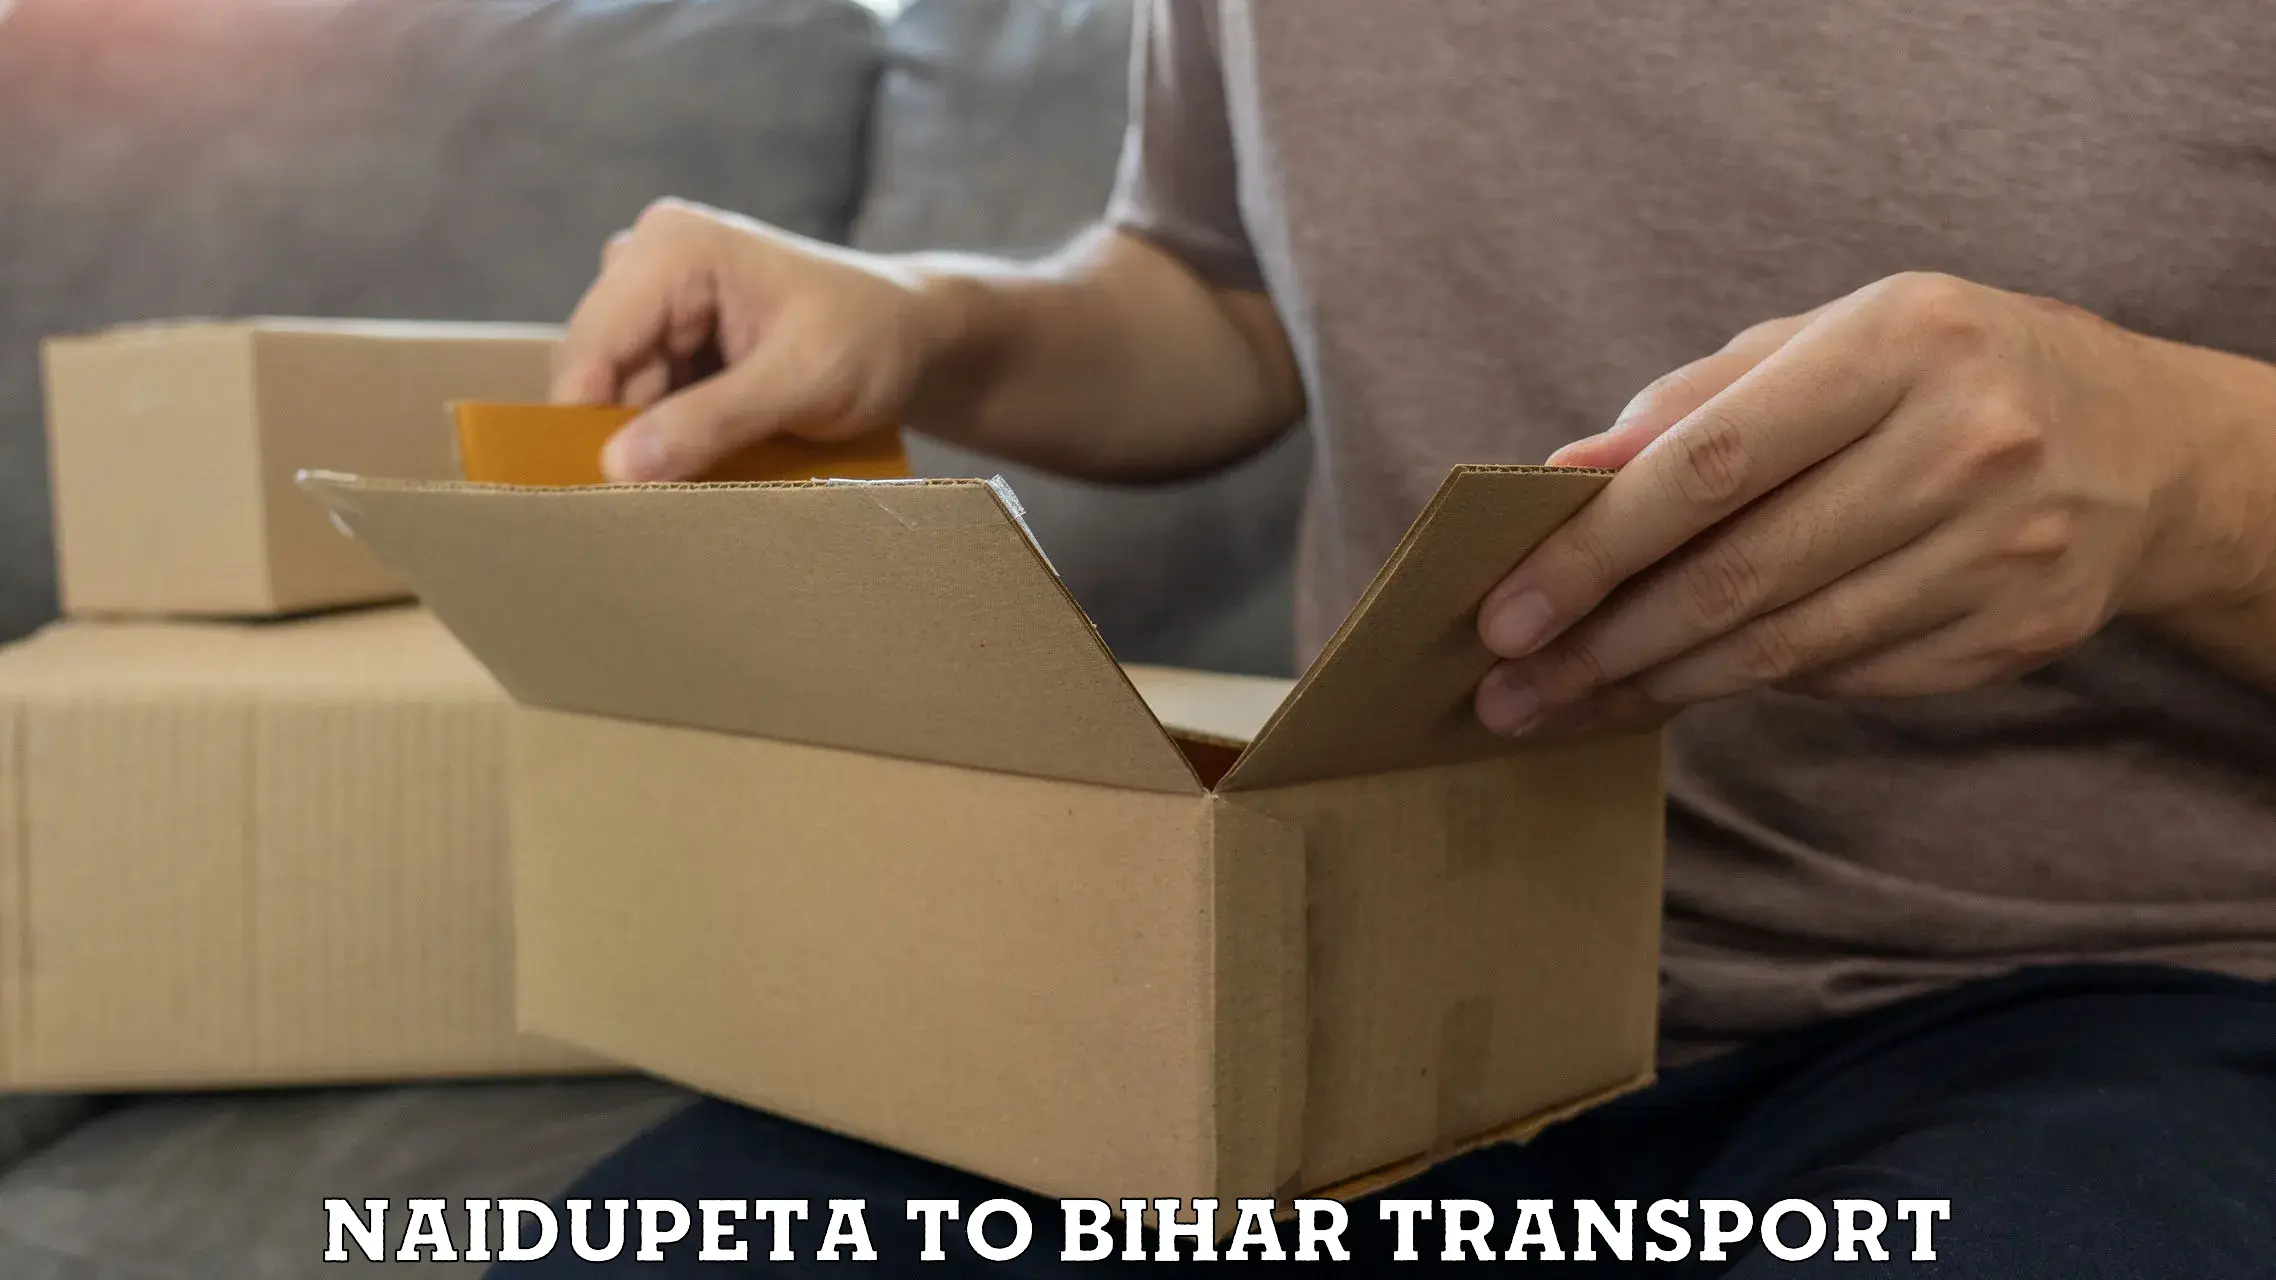 Cycle transportation service Naidupeta to Bihar